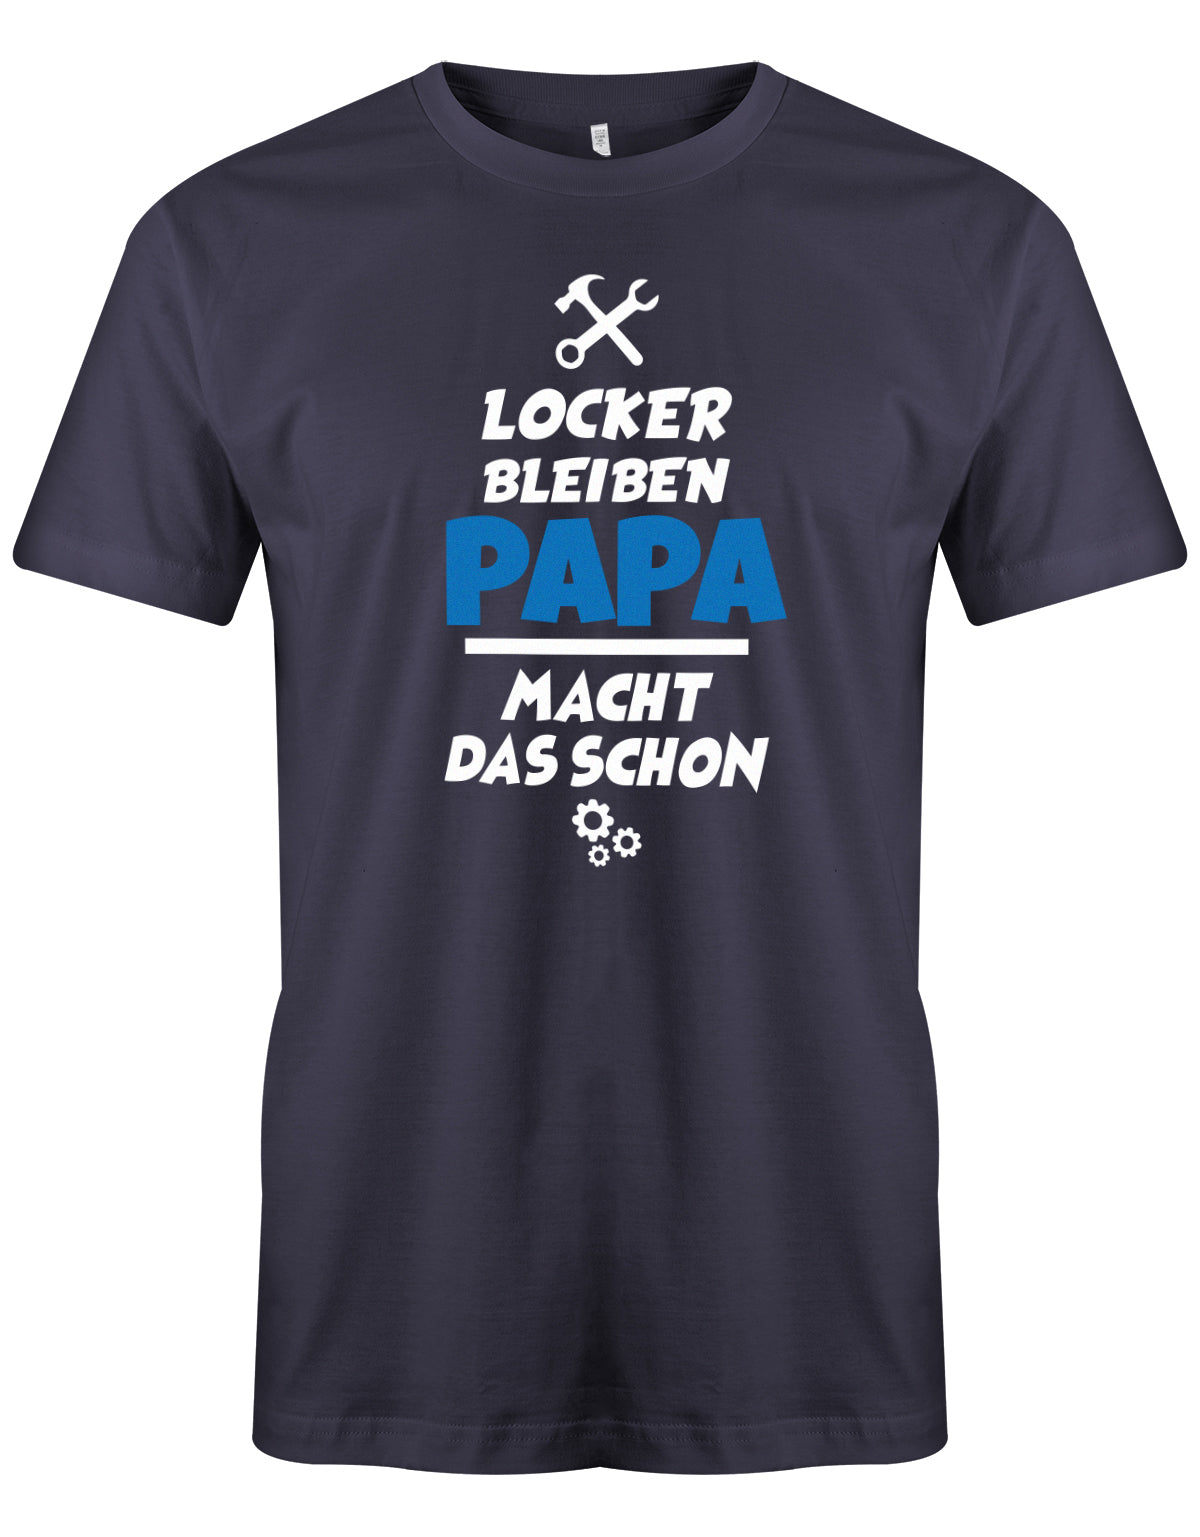 Papa T-Shirt - Locker bleiben Papa macht das schon Navy